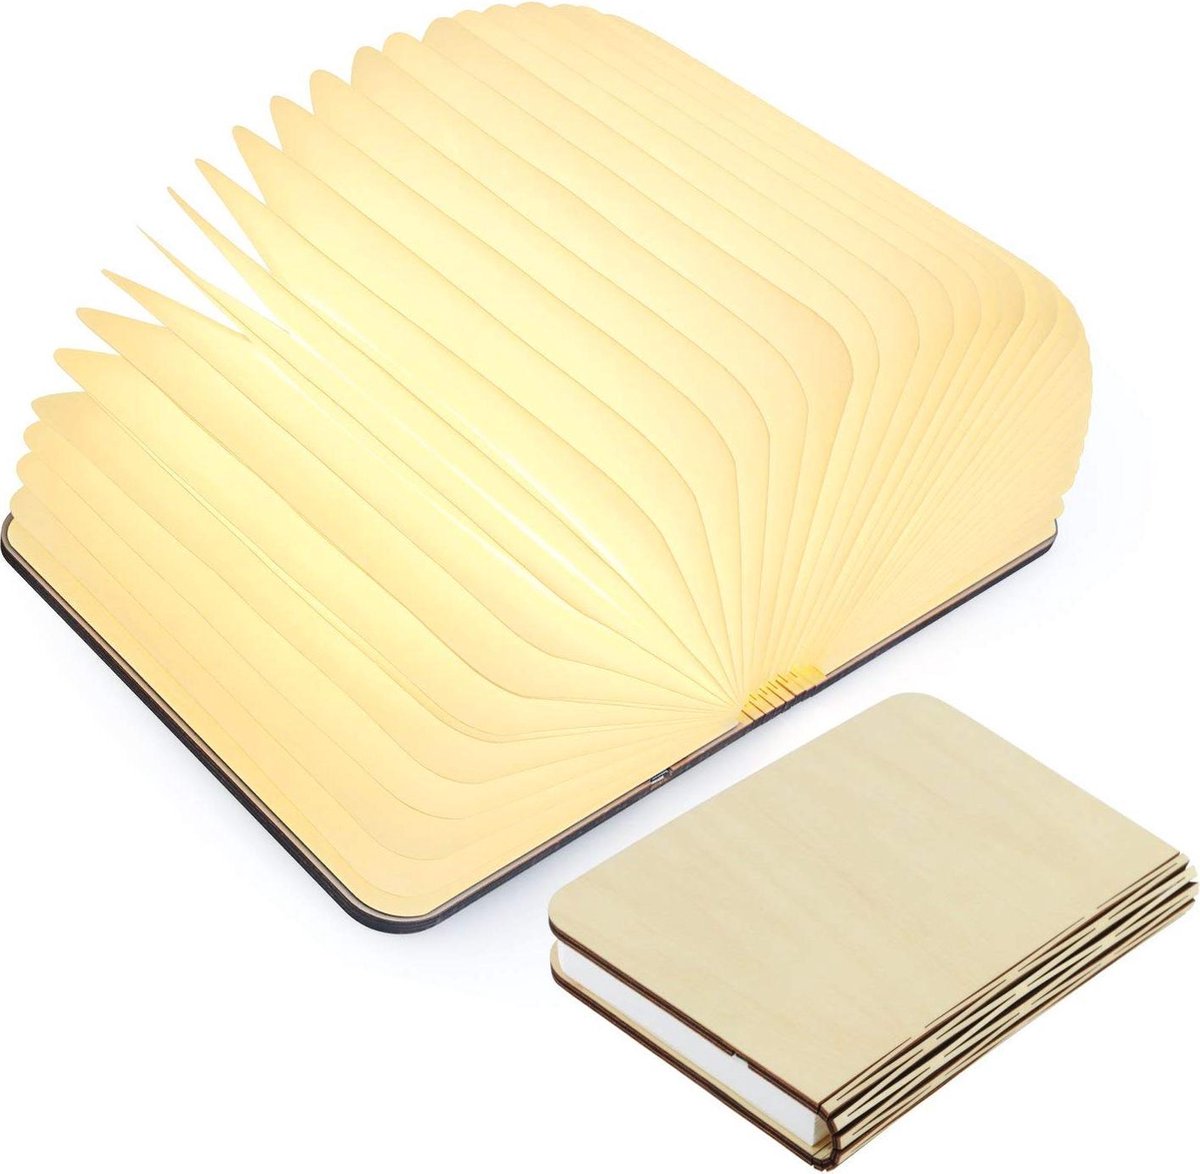 Boeklamp - lichtboek - Beige hout -Led verlichting - groot | bol.com